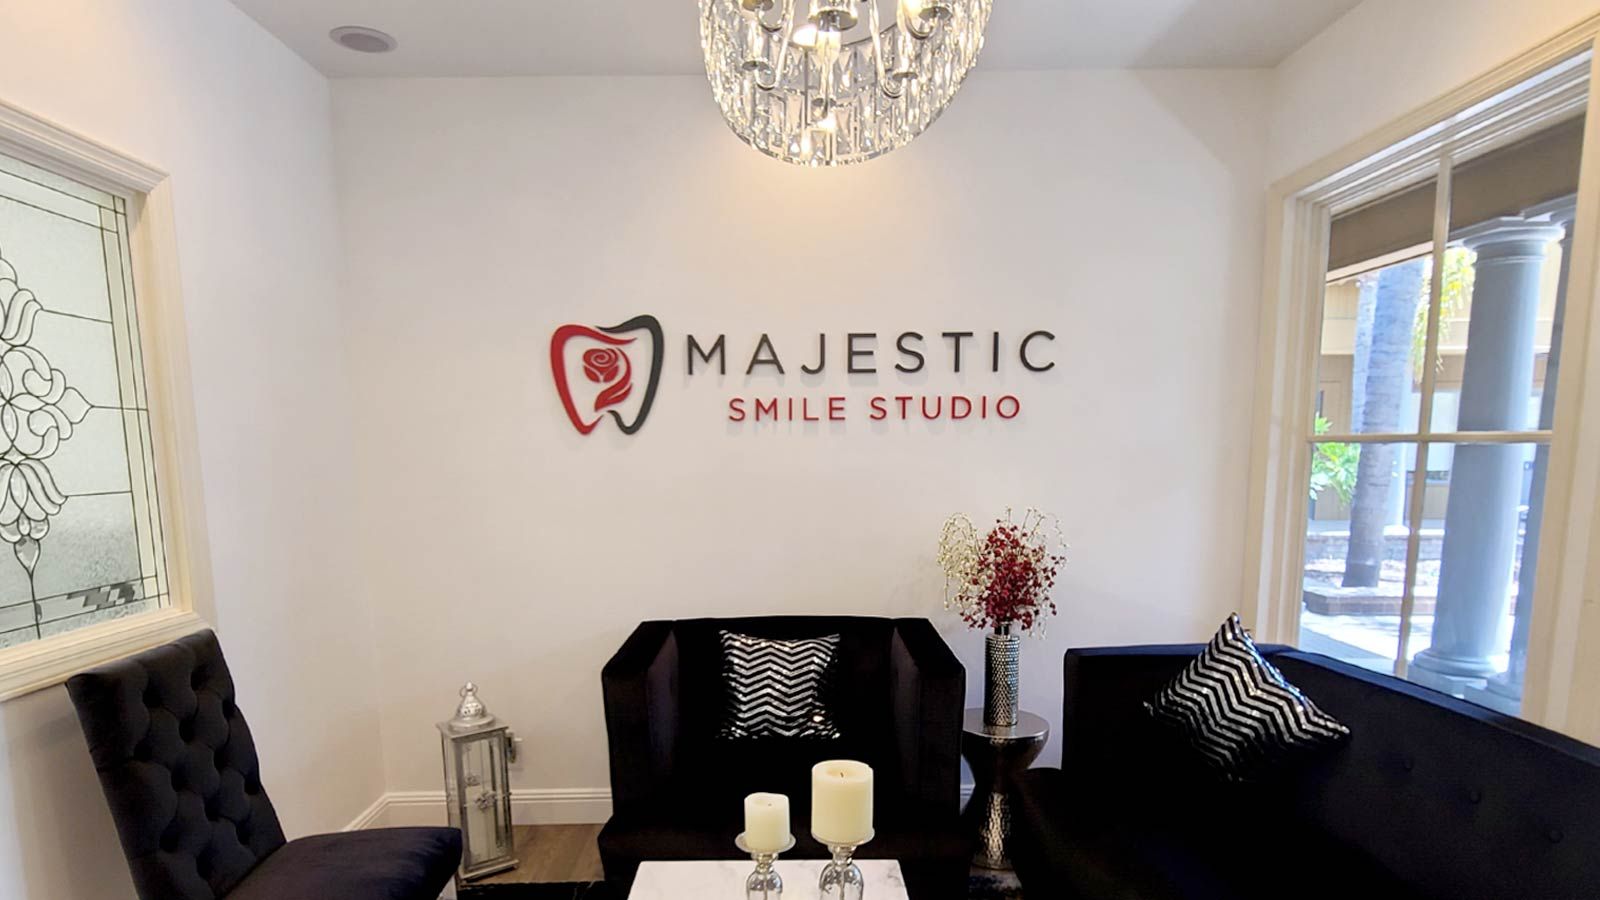 Majestic Smile Studio 3D logo lobby sign